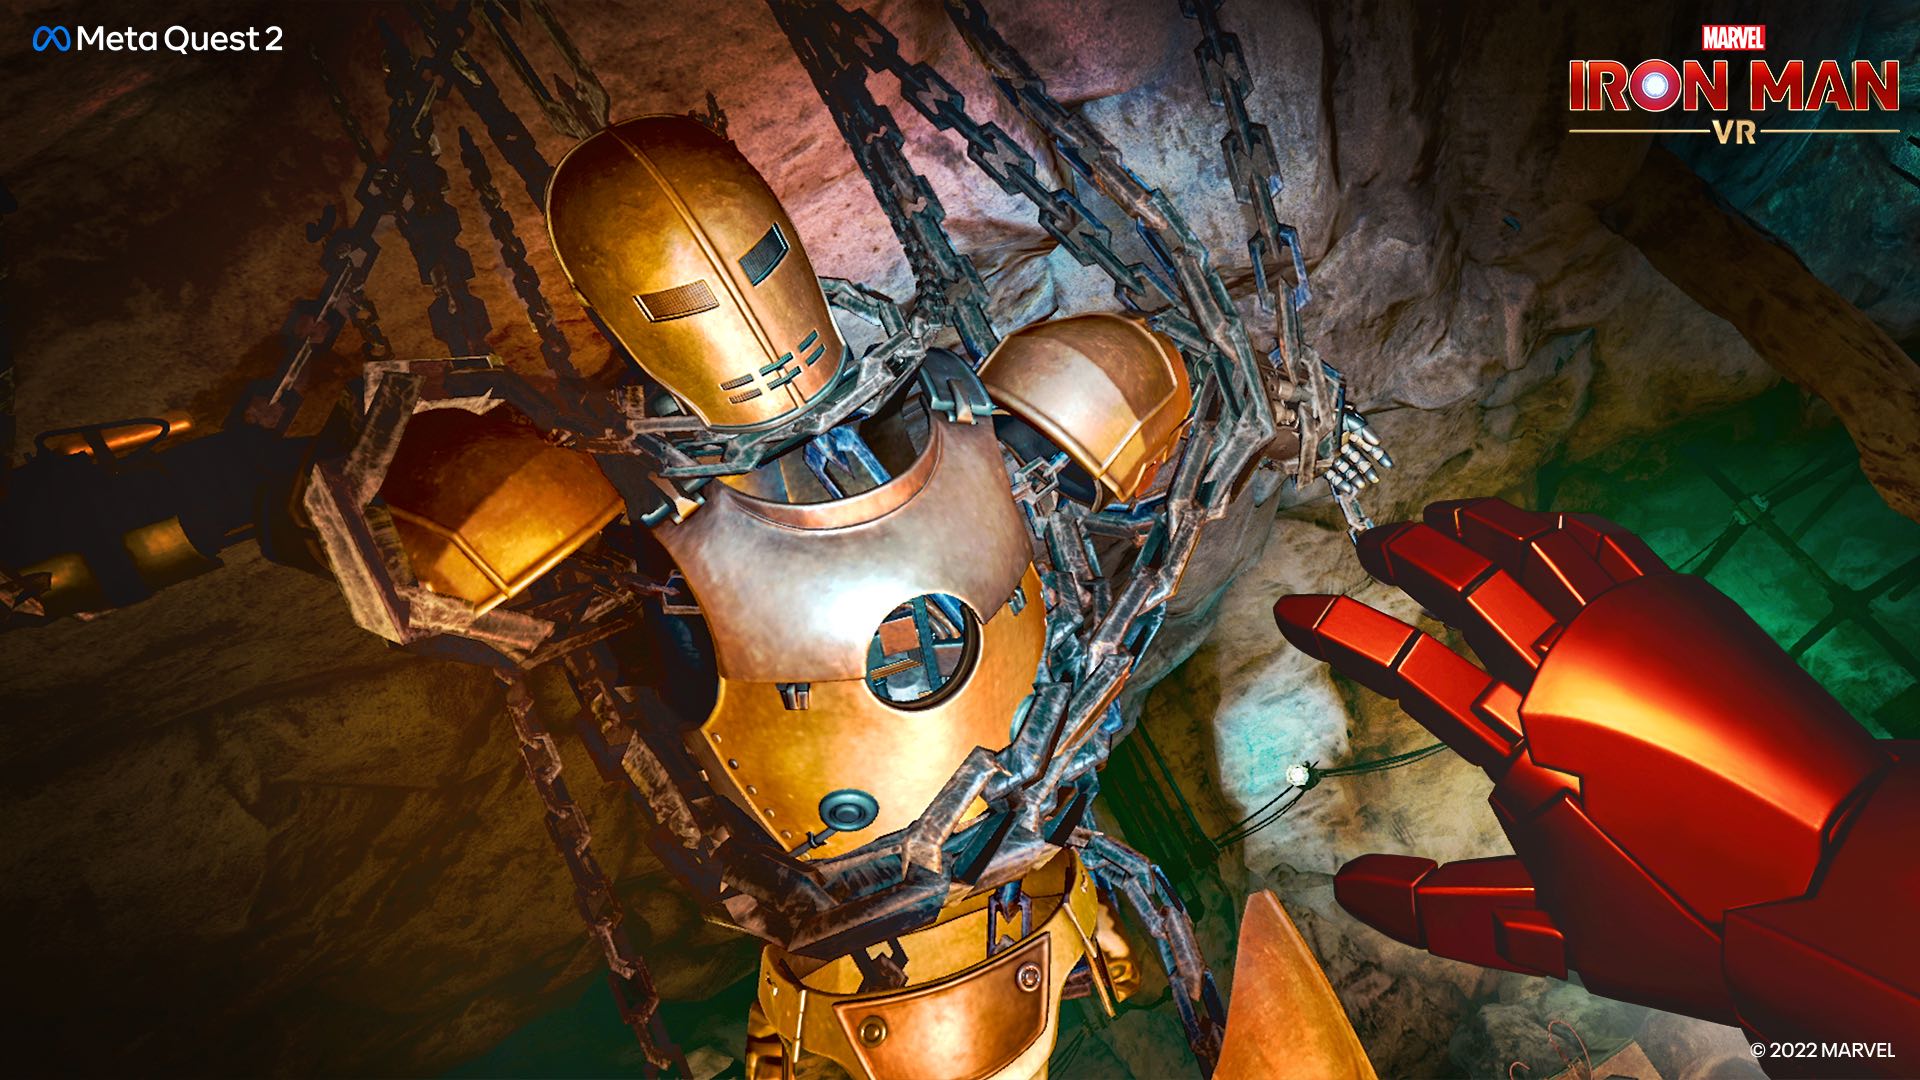 Marvel Iron Man VR Meta Quest 2 featuring the Mark 1 Iron Man armor